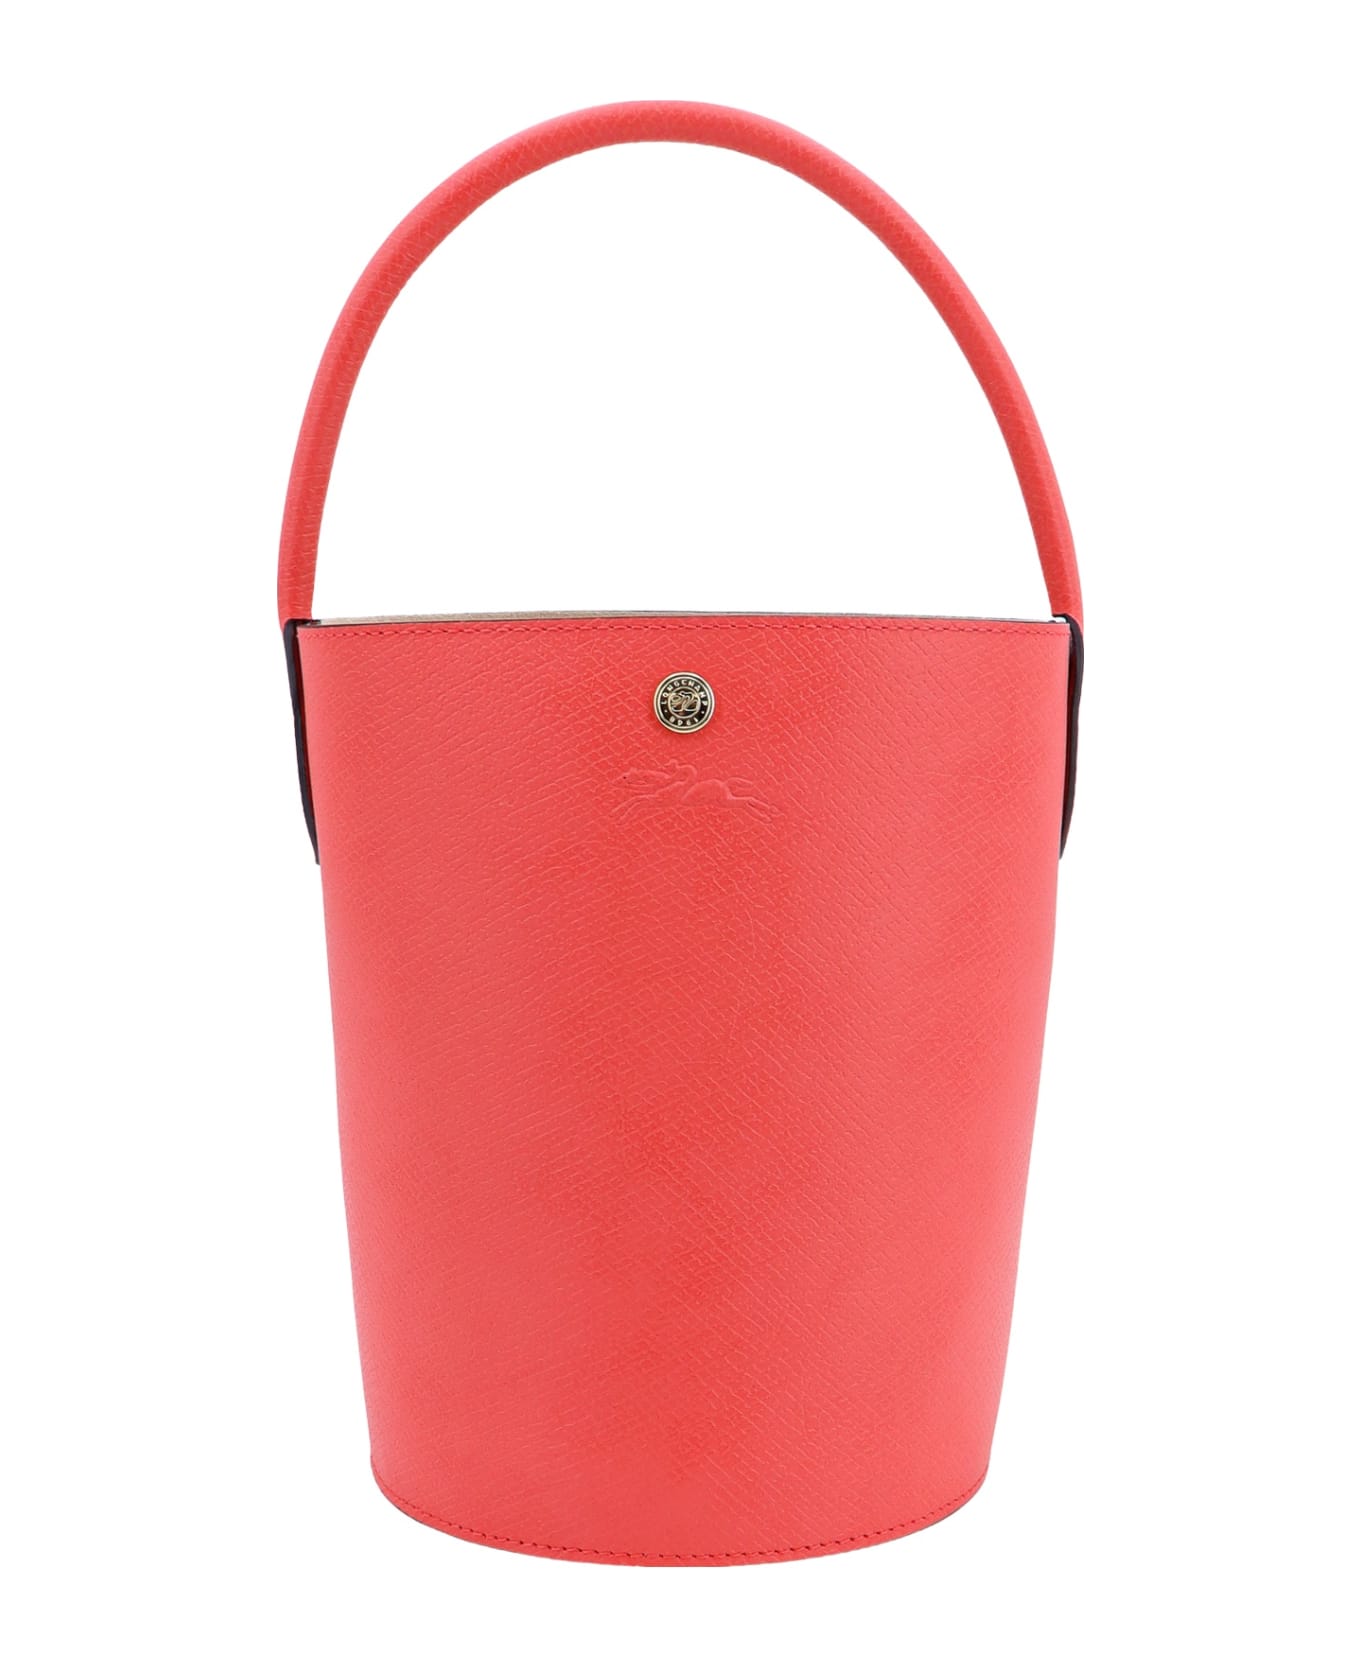 Longchamp Re Bucket Bag - Fragola